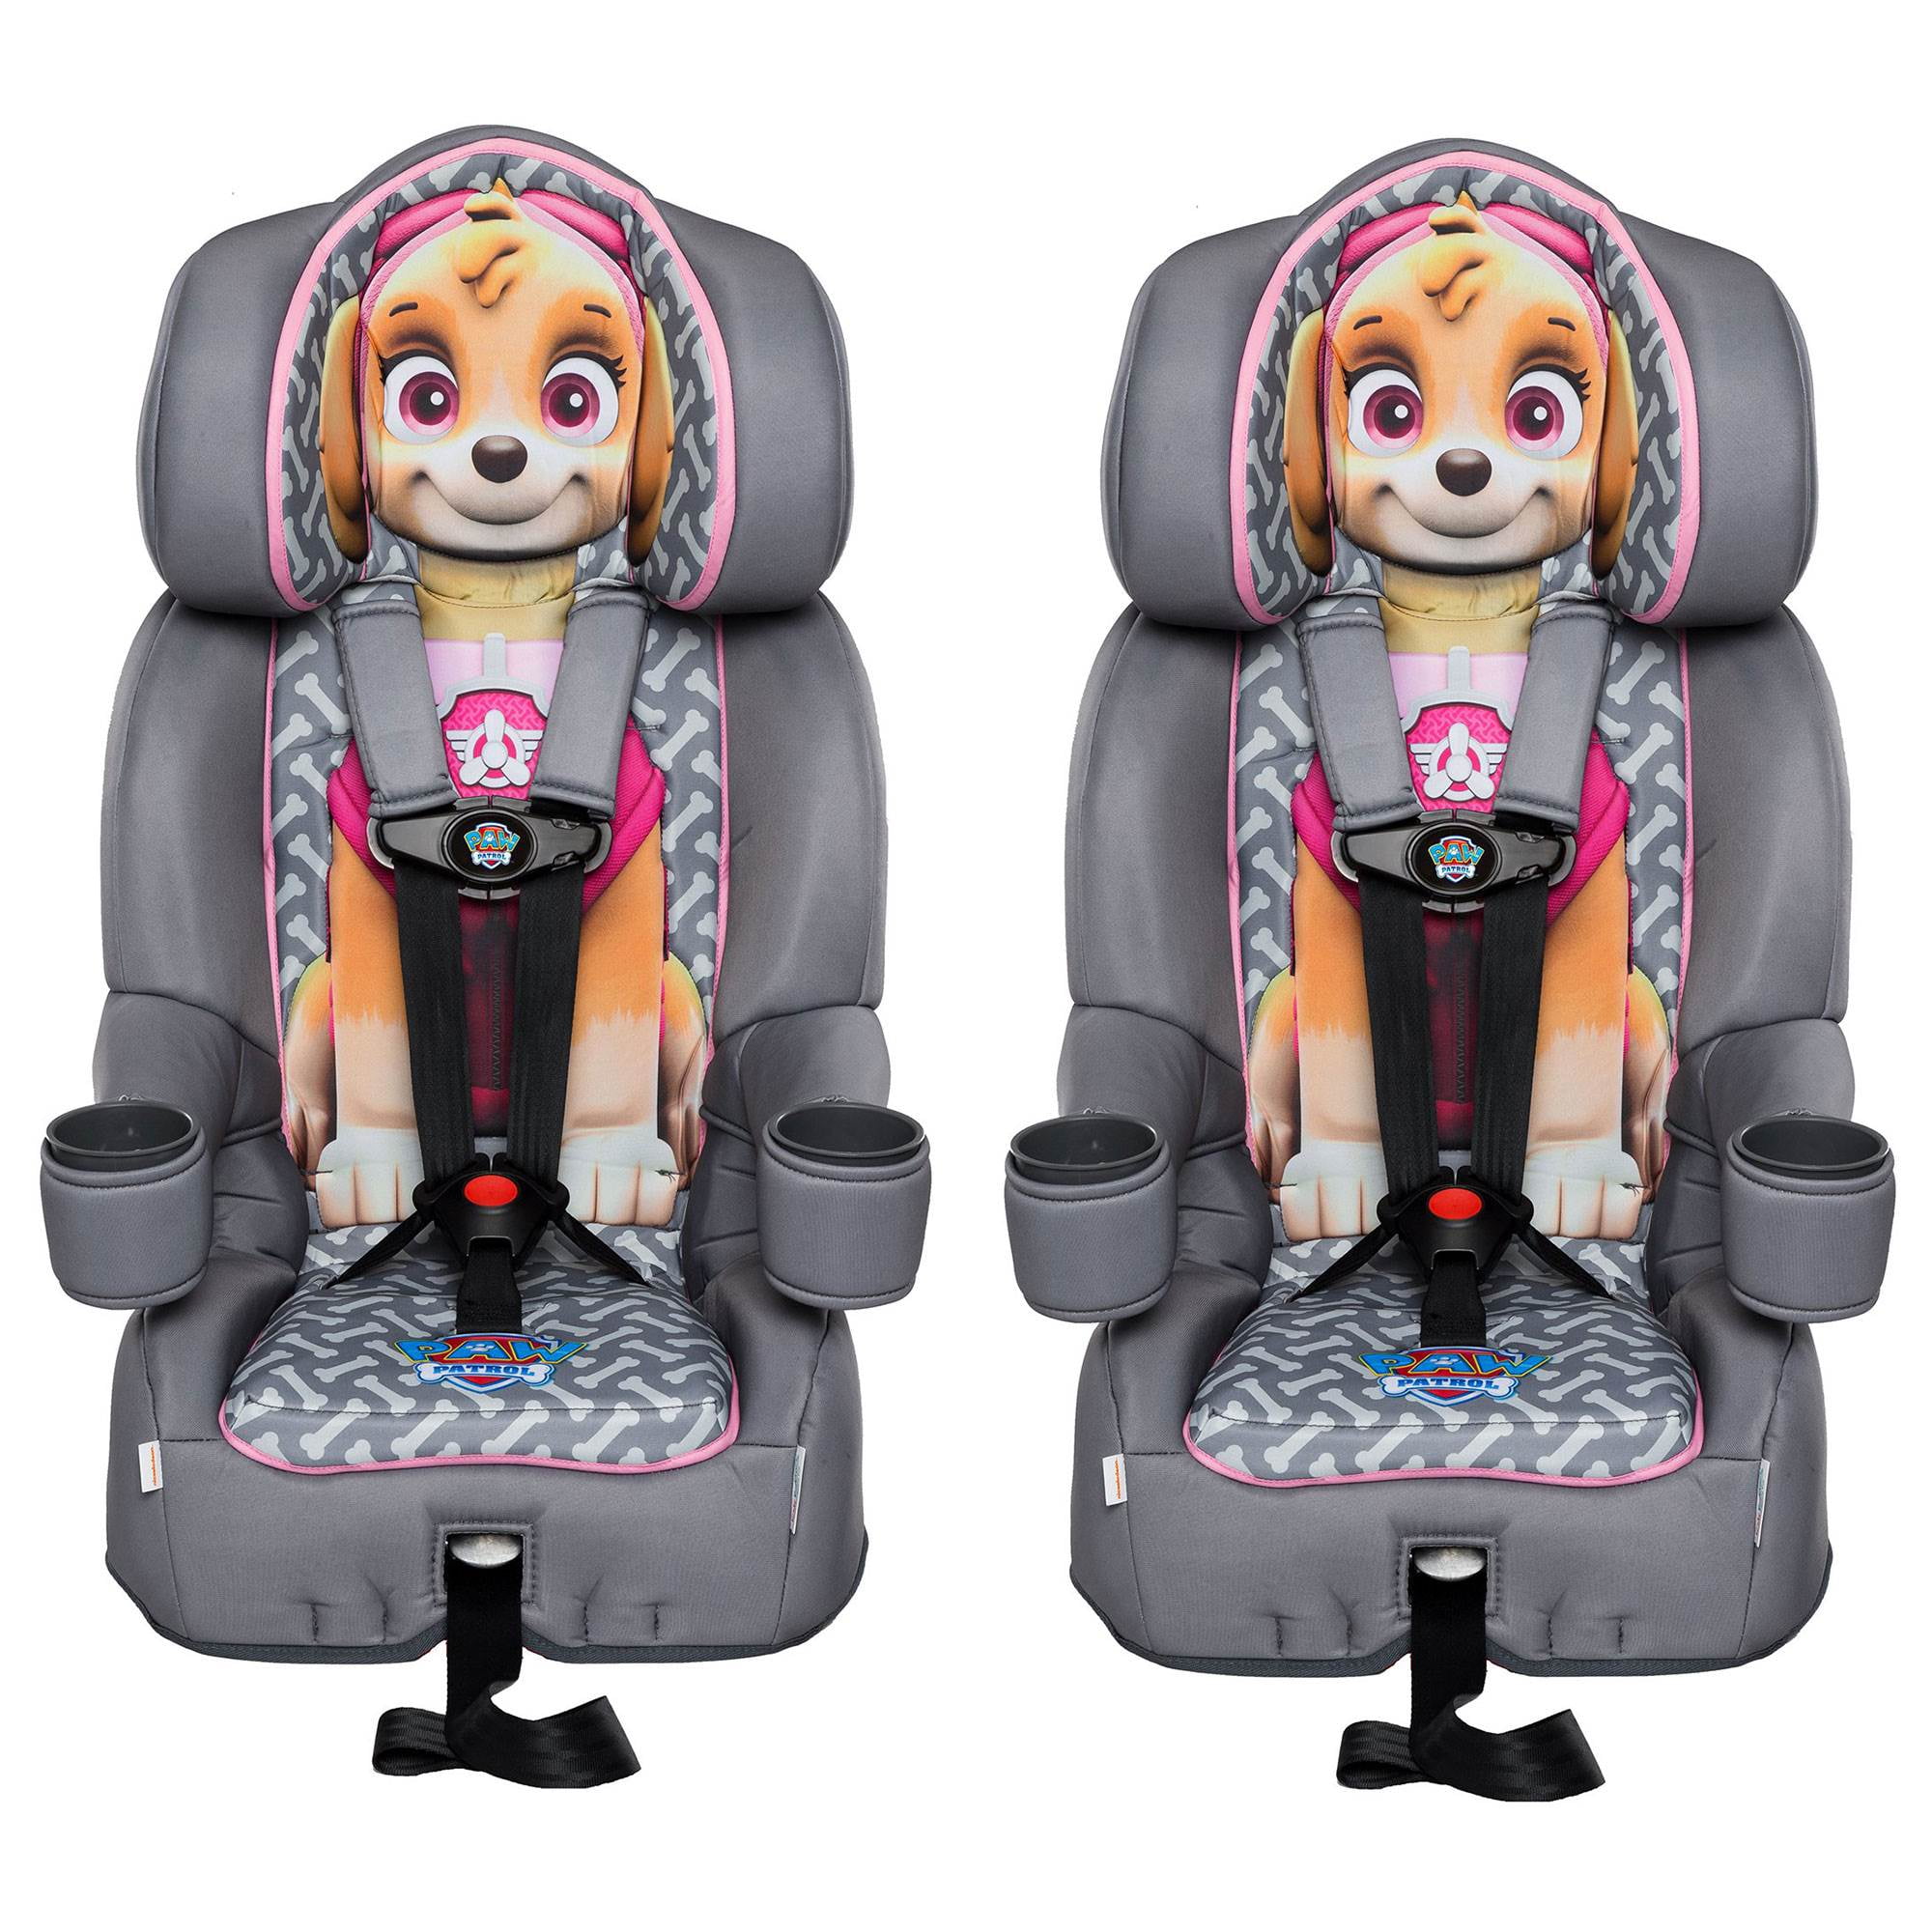 KidsEmbrace 2-in-1 Harness Booster Car Seat Nickelodeon Paw Patrol Skye 